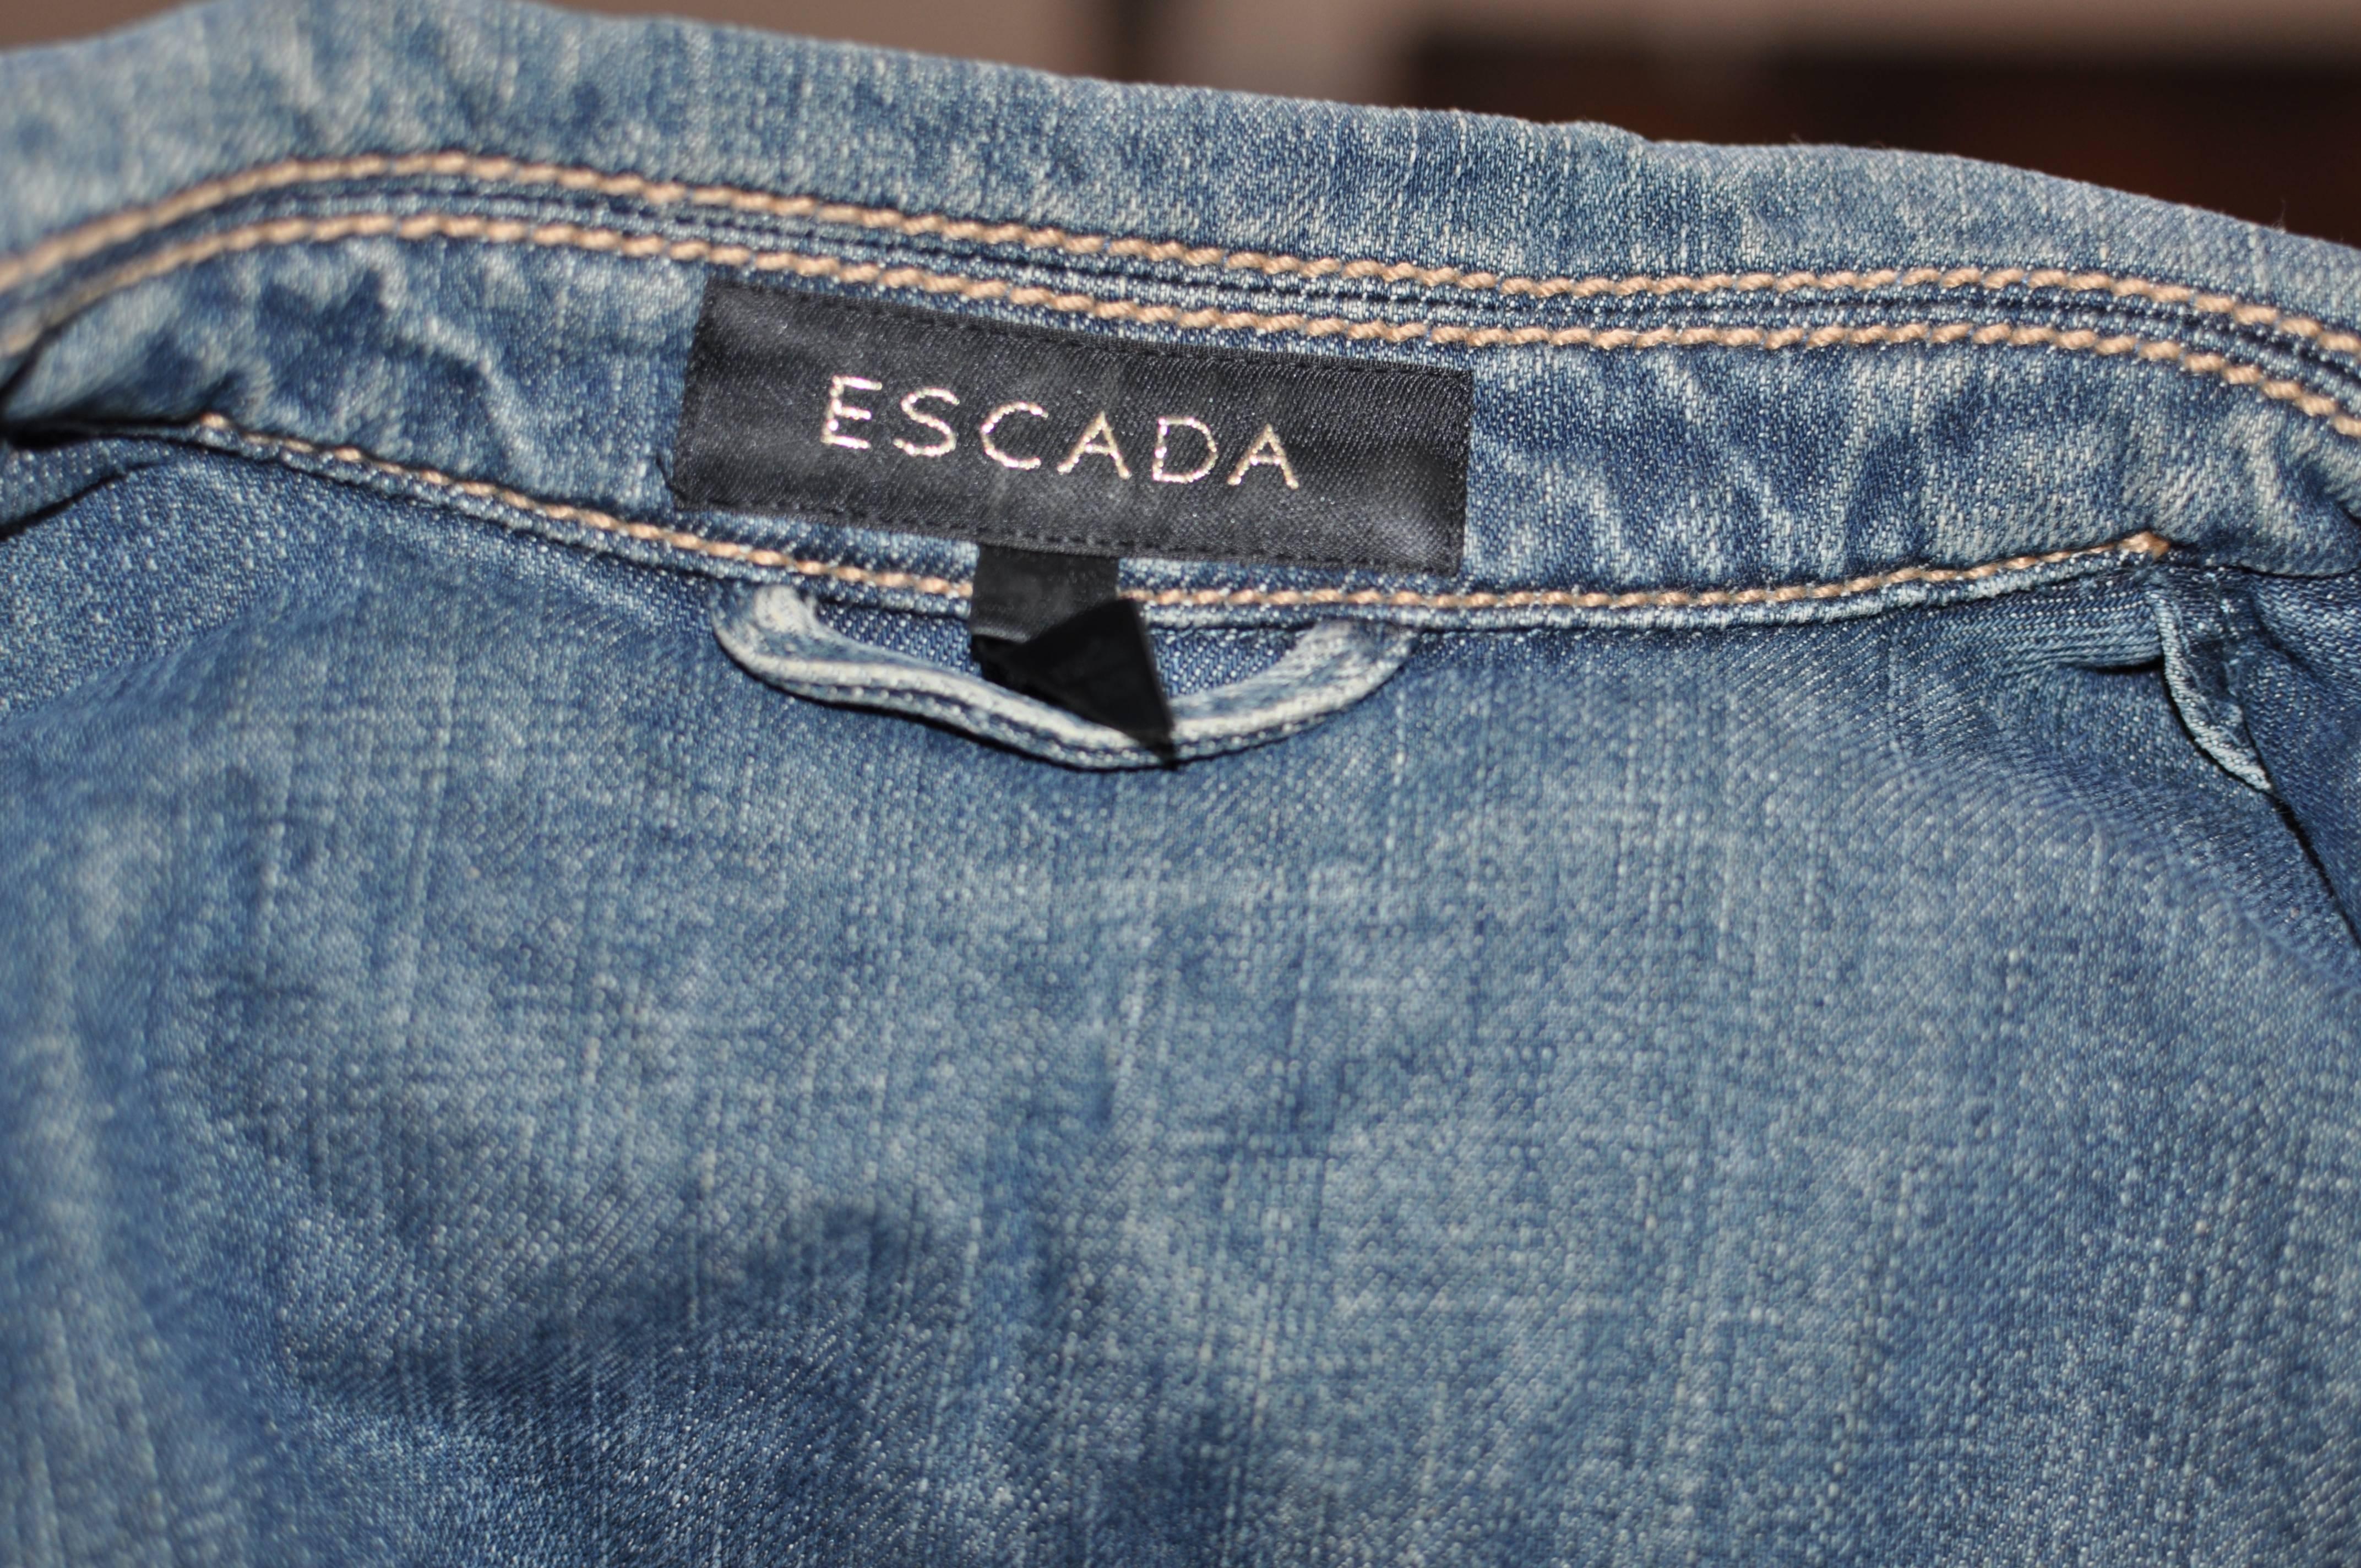 Escada Jean Jacket with Weathered Pocket Design (34) 3